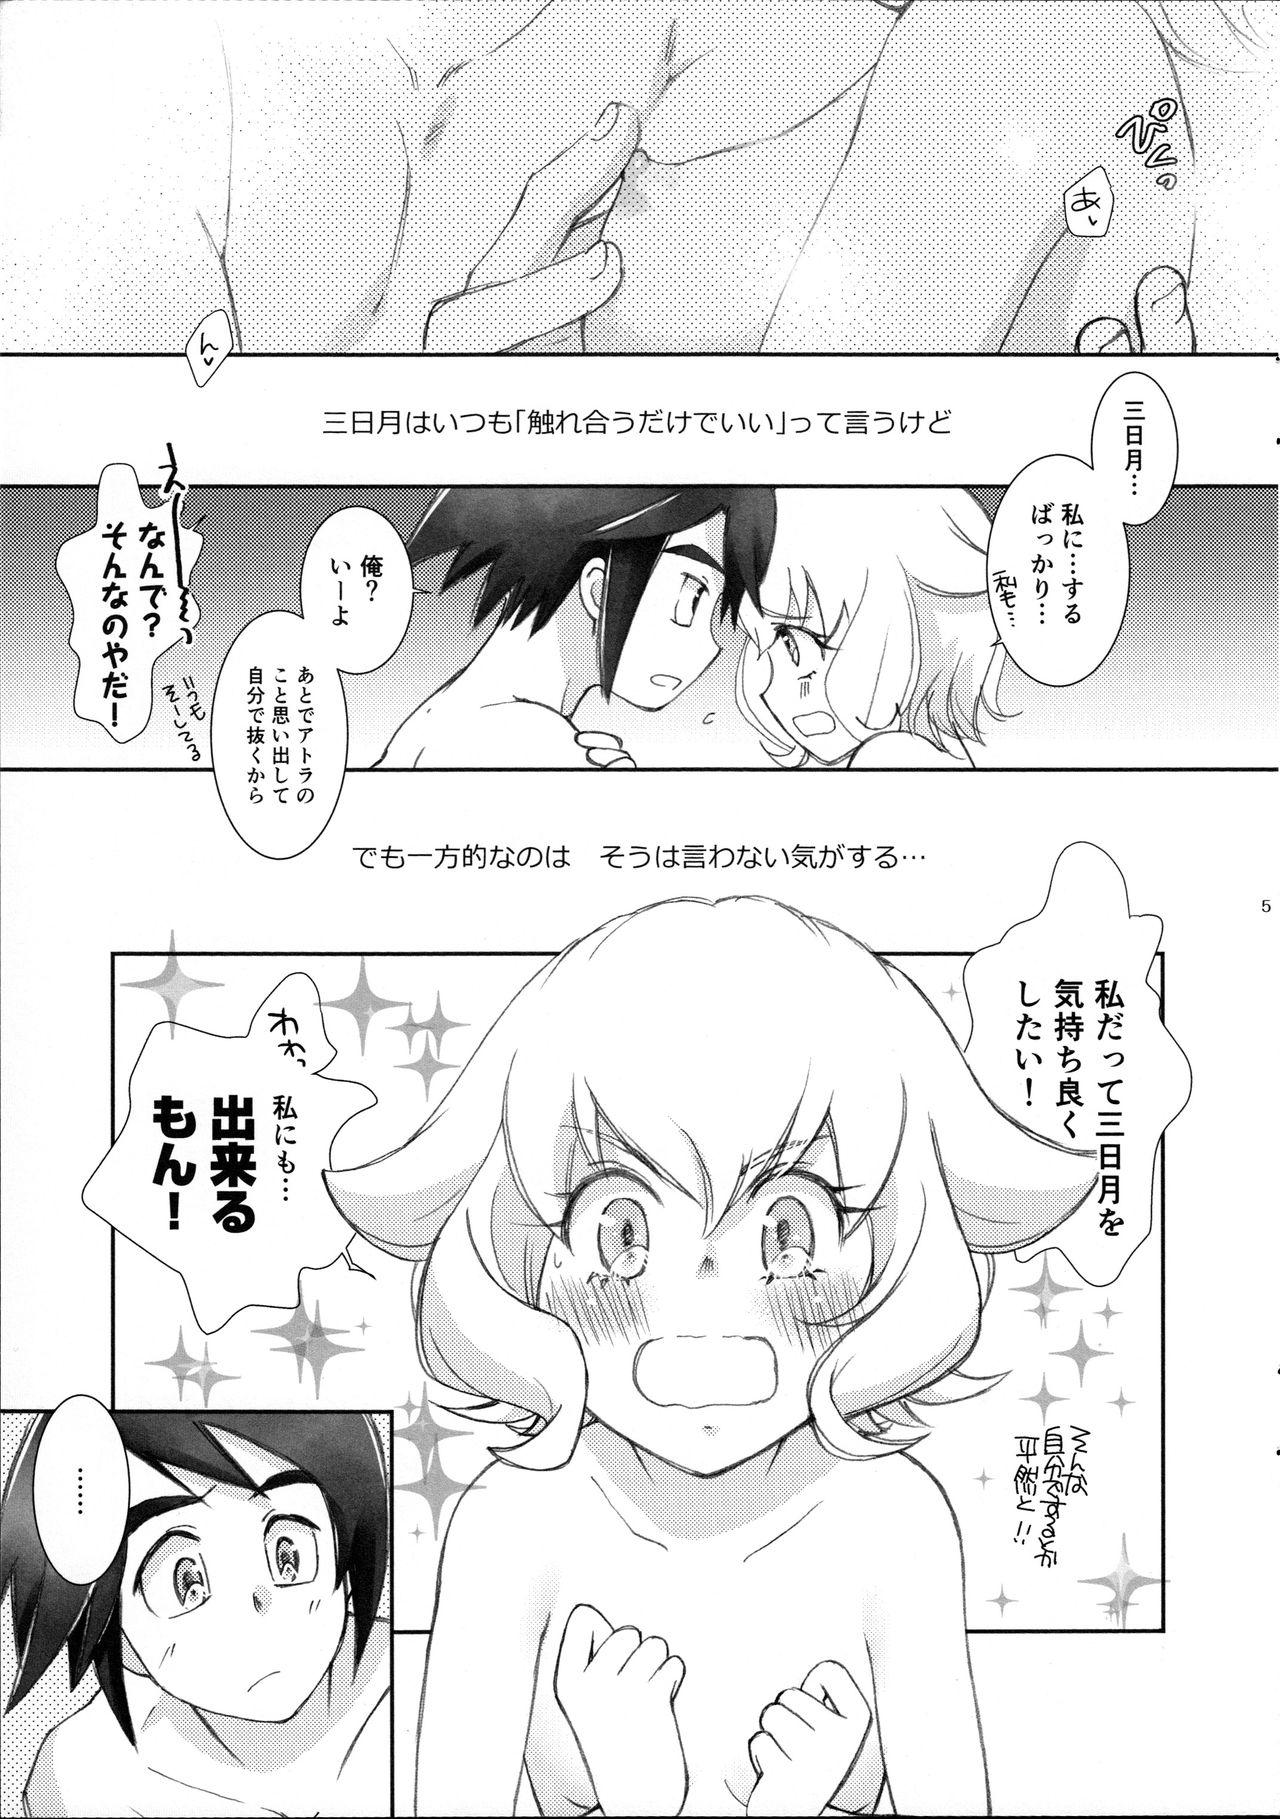 Toilet Mikazuki wa Itsumo Saigomade Shinai - Mobile suit gundam tekketsu no orphans Spooning - Page 4